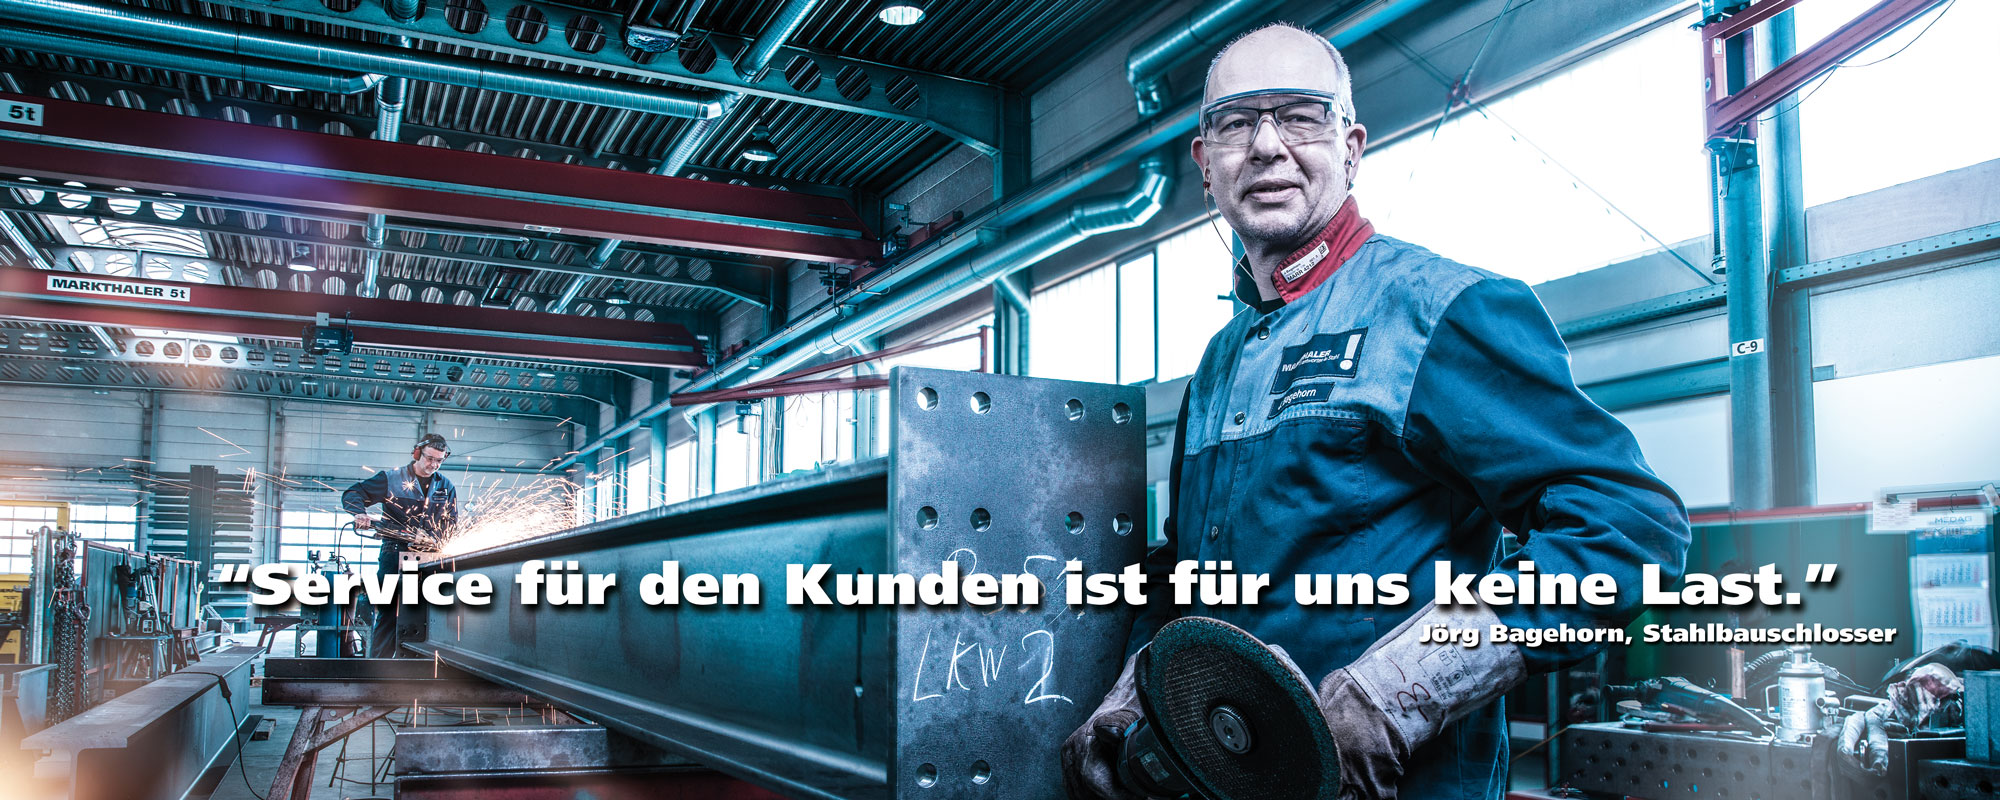 MArkthaler Stahlbau Maschinenbau - Service